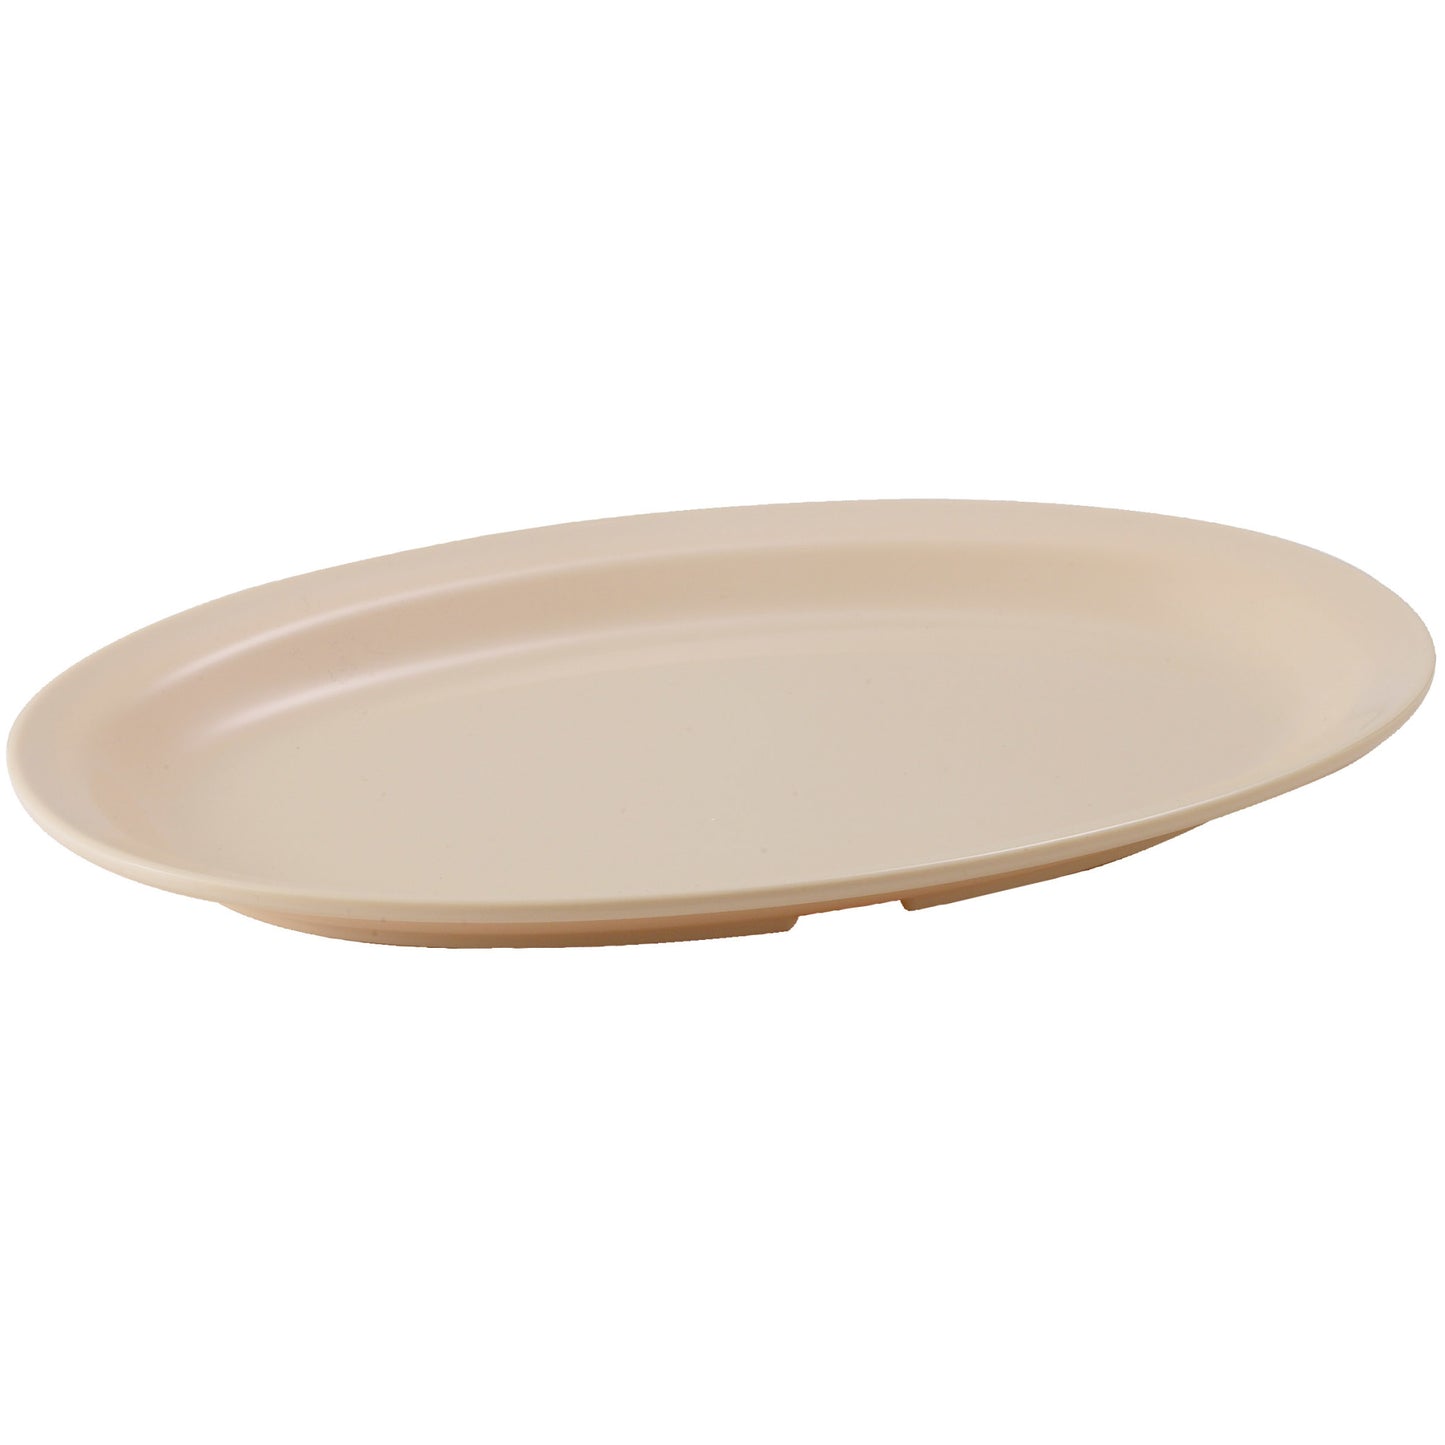 MMPO-1510 - Melamine 15-1/2" x 10-7/8" Oval Platter - Tan